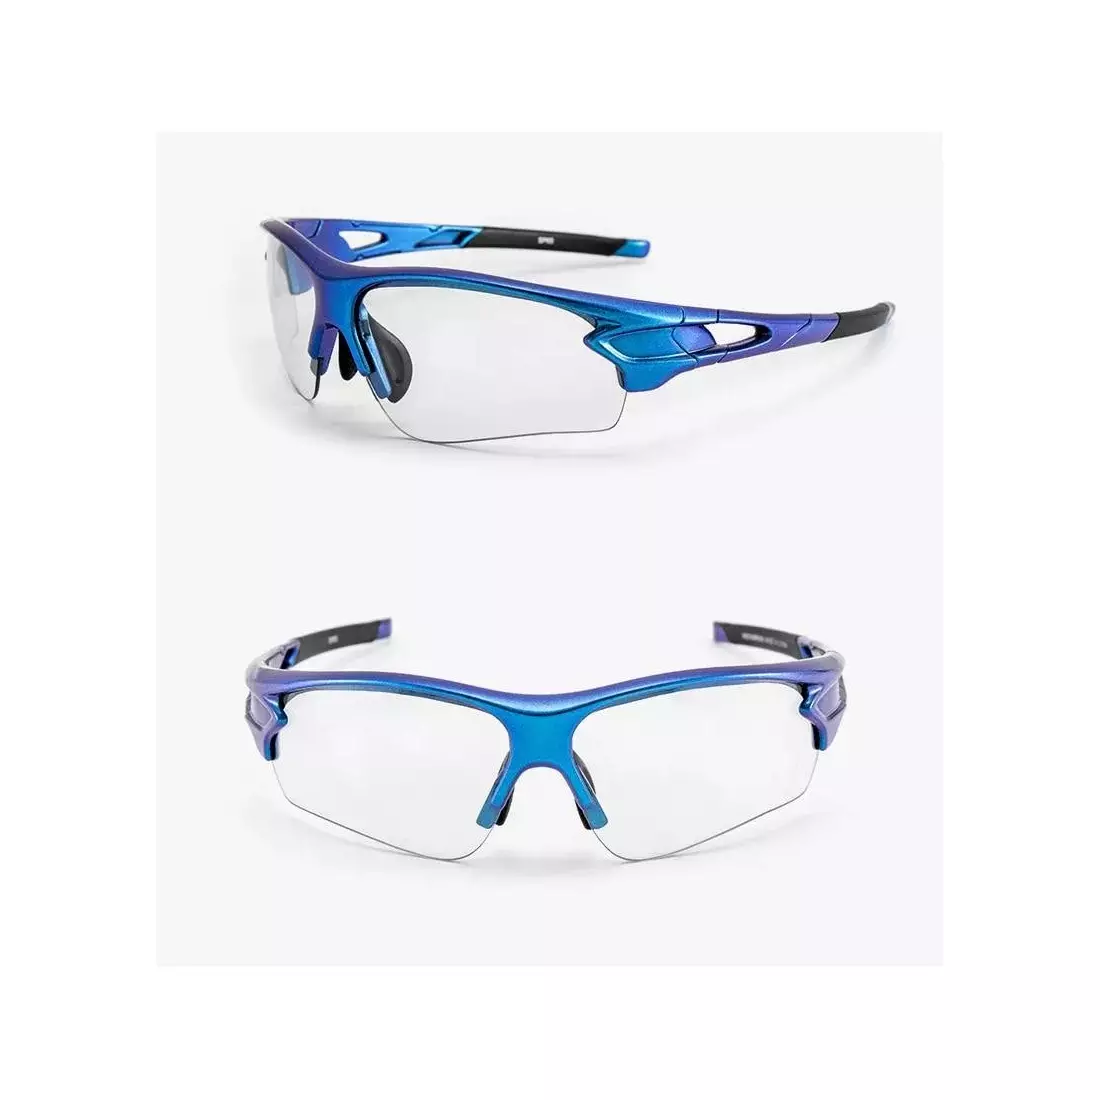 Rockbros Fahrrad-/Sportbrille mit photochromem Blau 10069